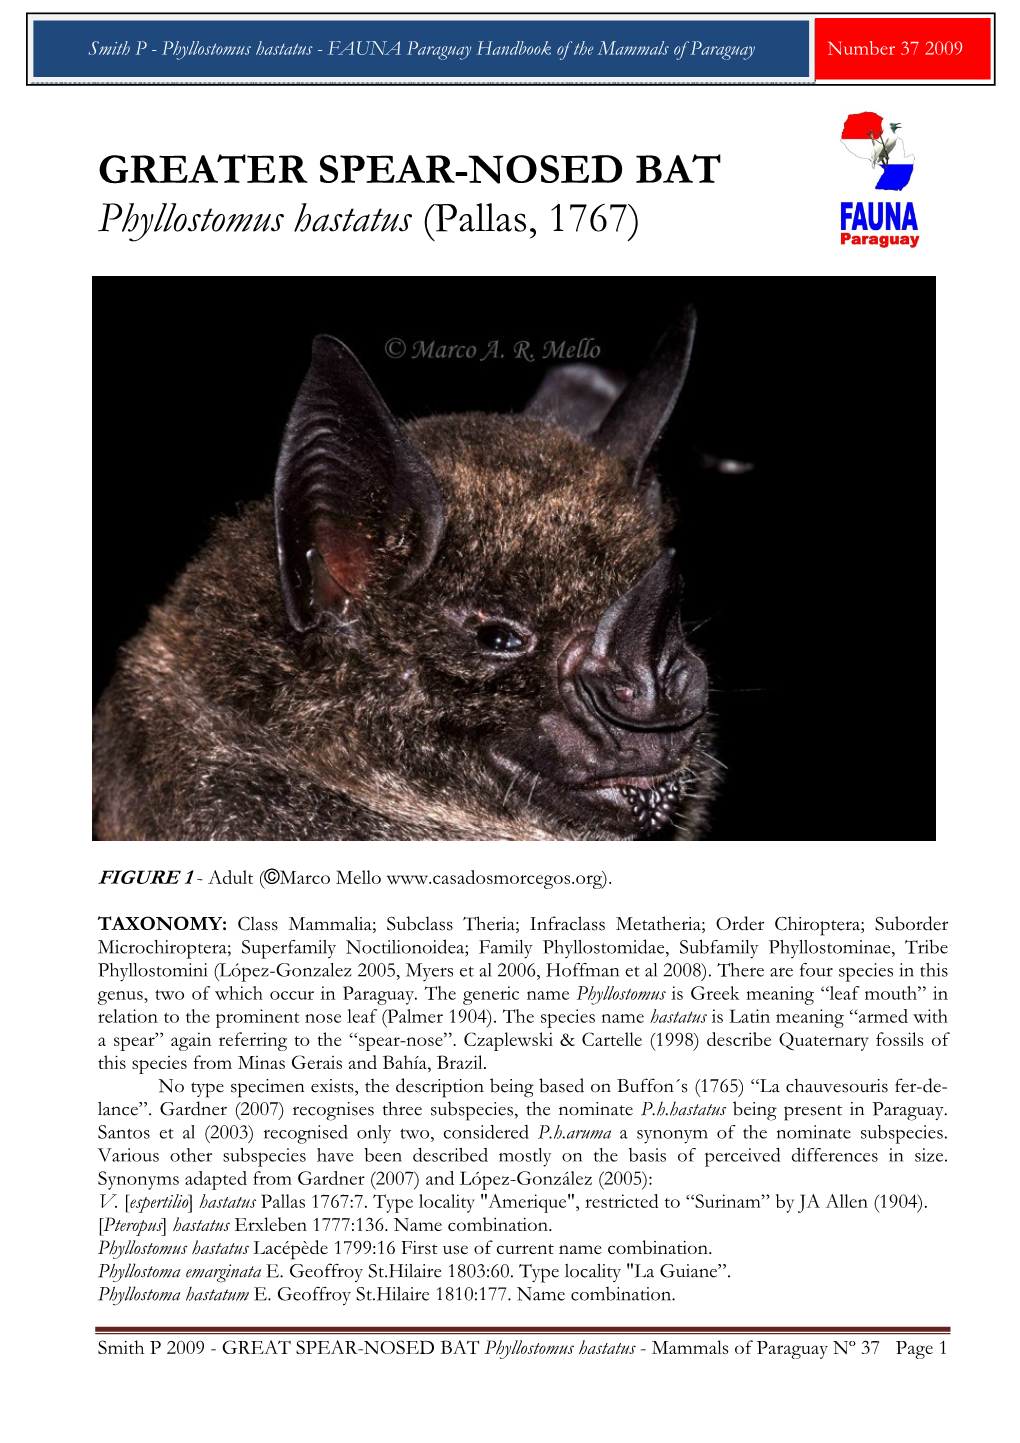 GREATER SPEAR-NOSED BAT Phyllostomus Hastatus (Pallas, 1767)